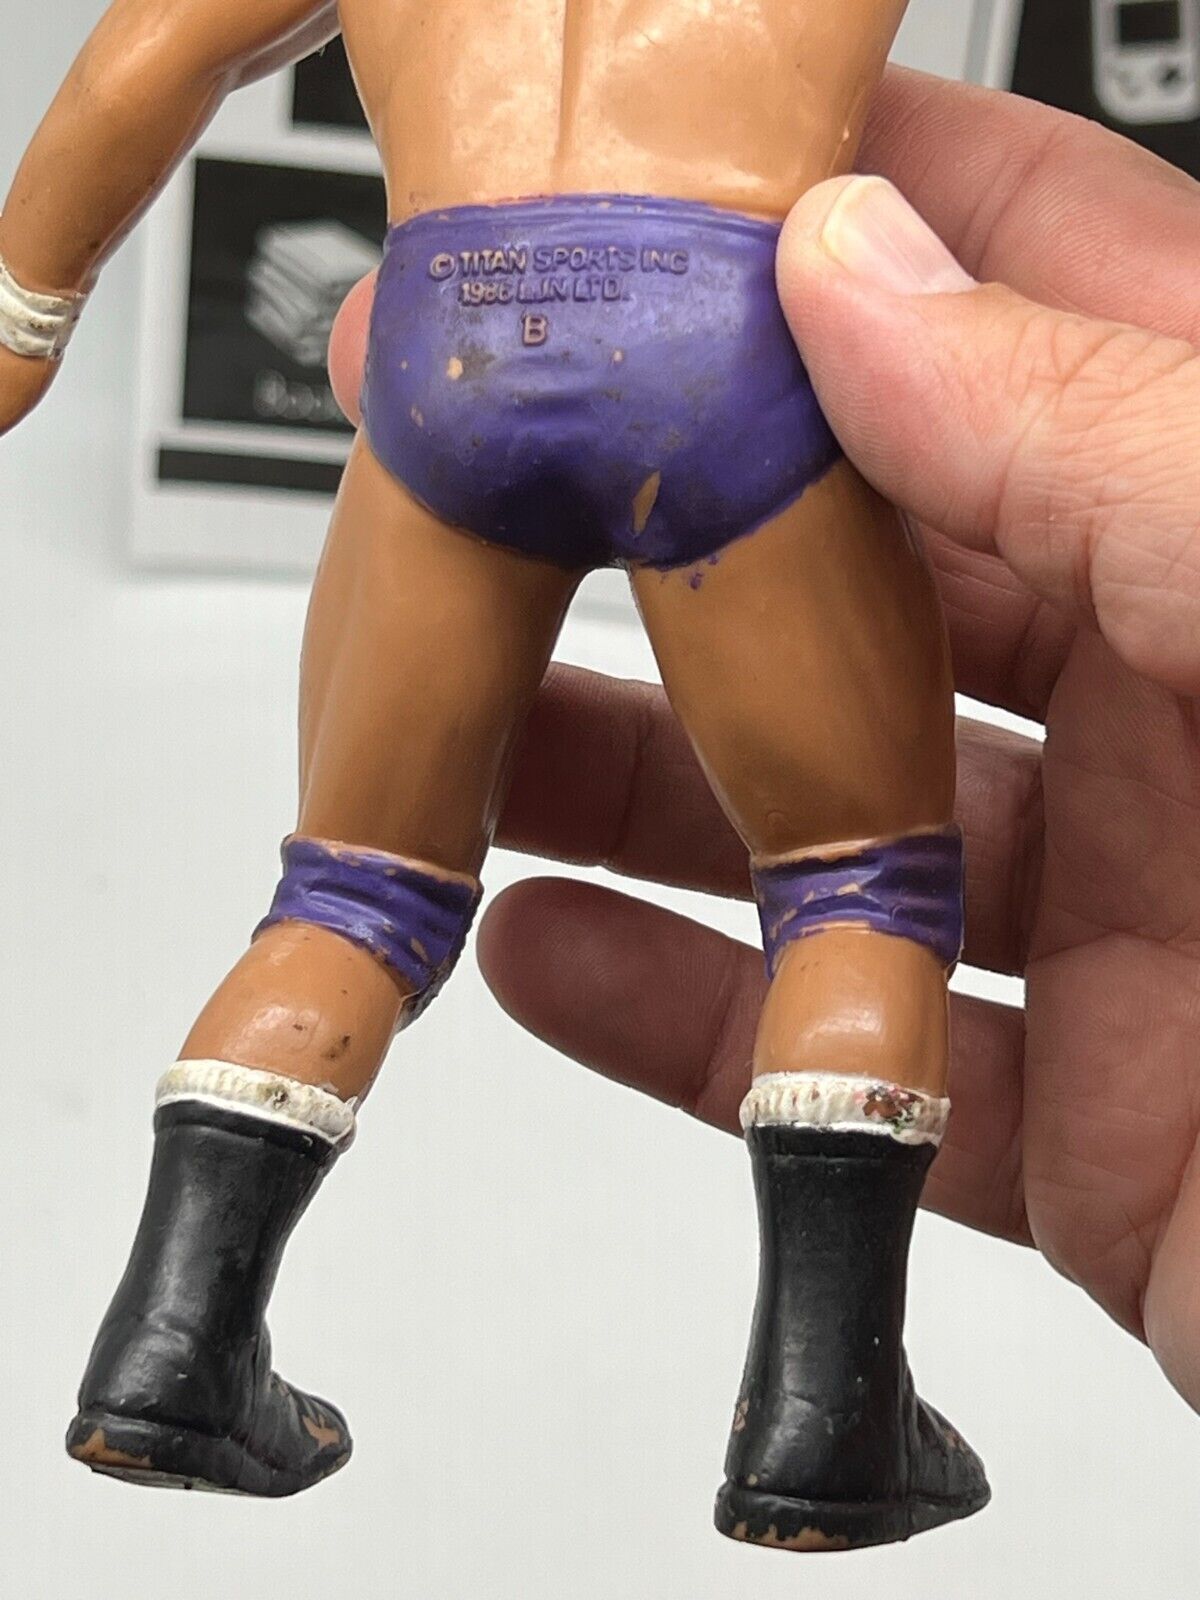 Vintage 1986 LJN WWF Wrestling Superstars Tito Santana Purple Shorts Figure